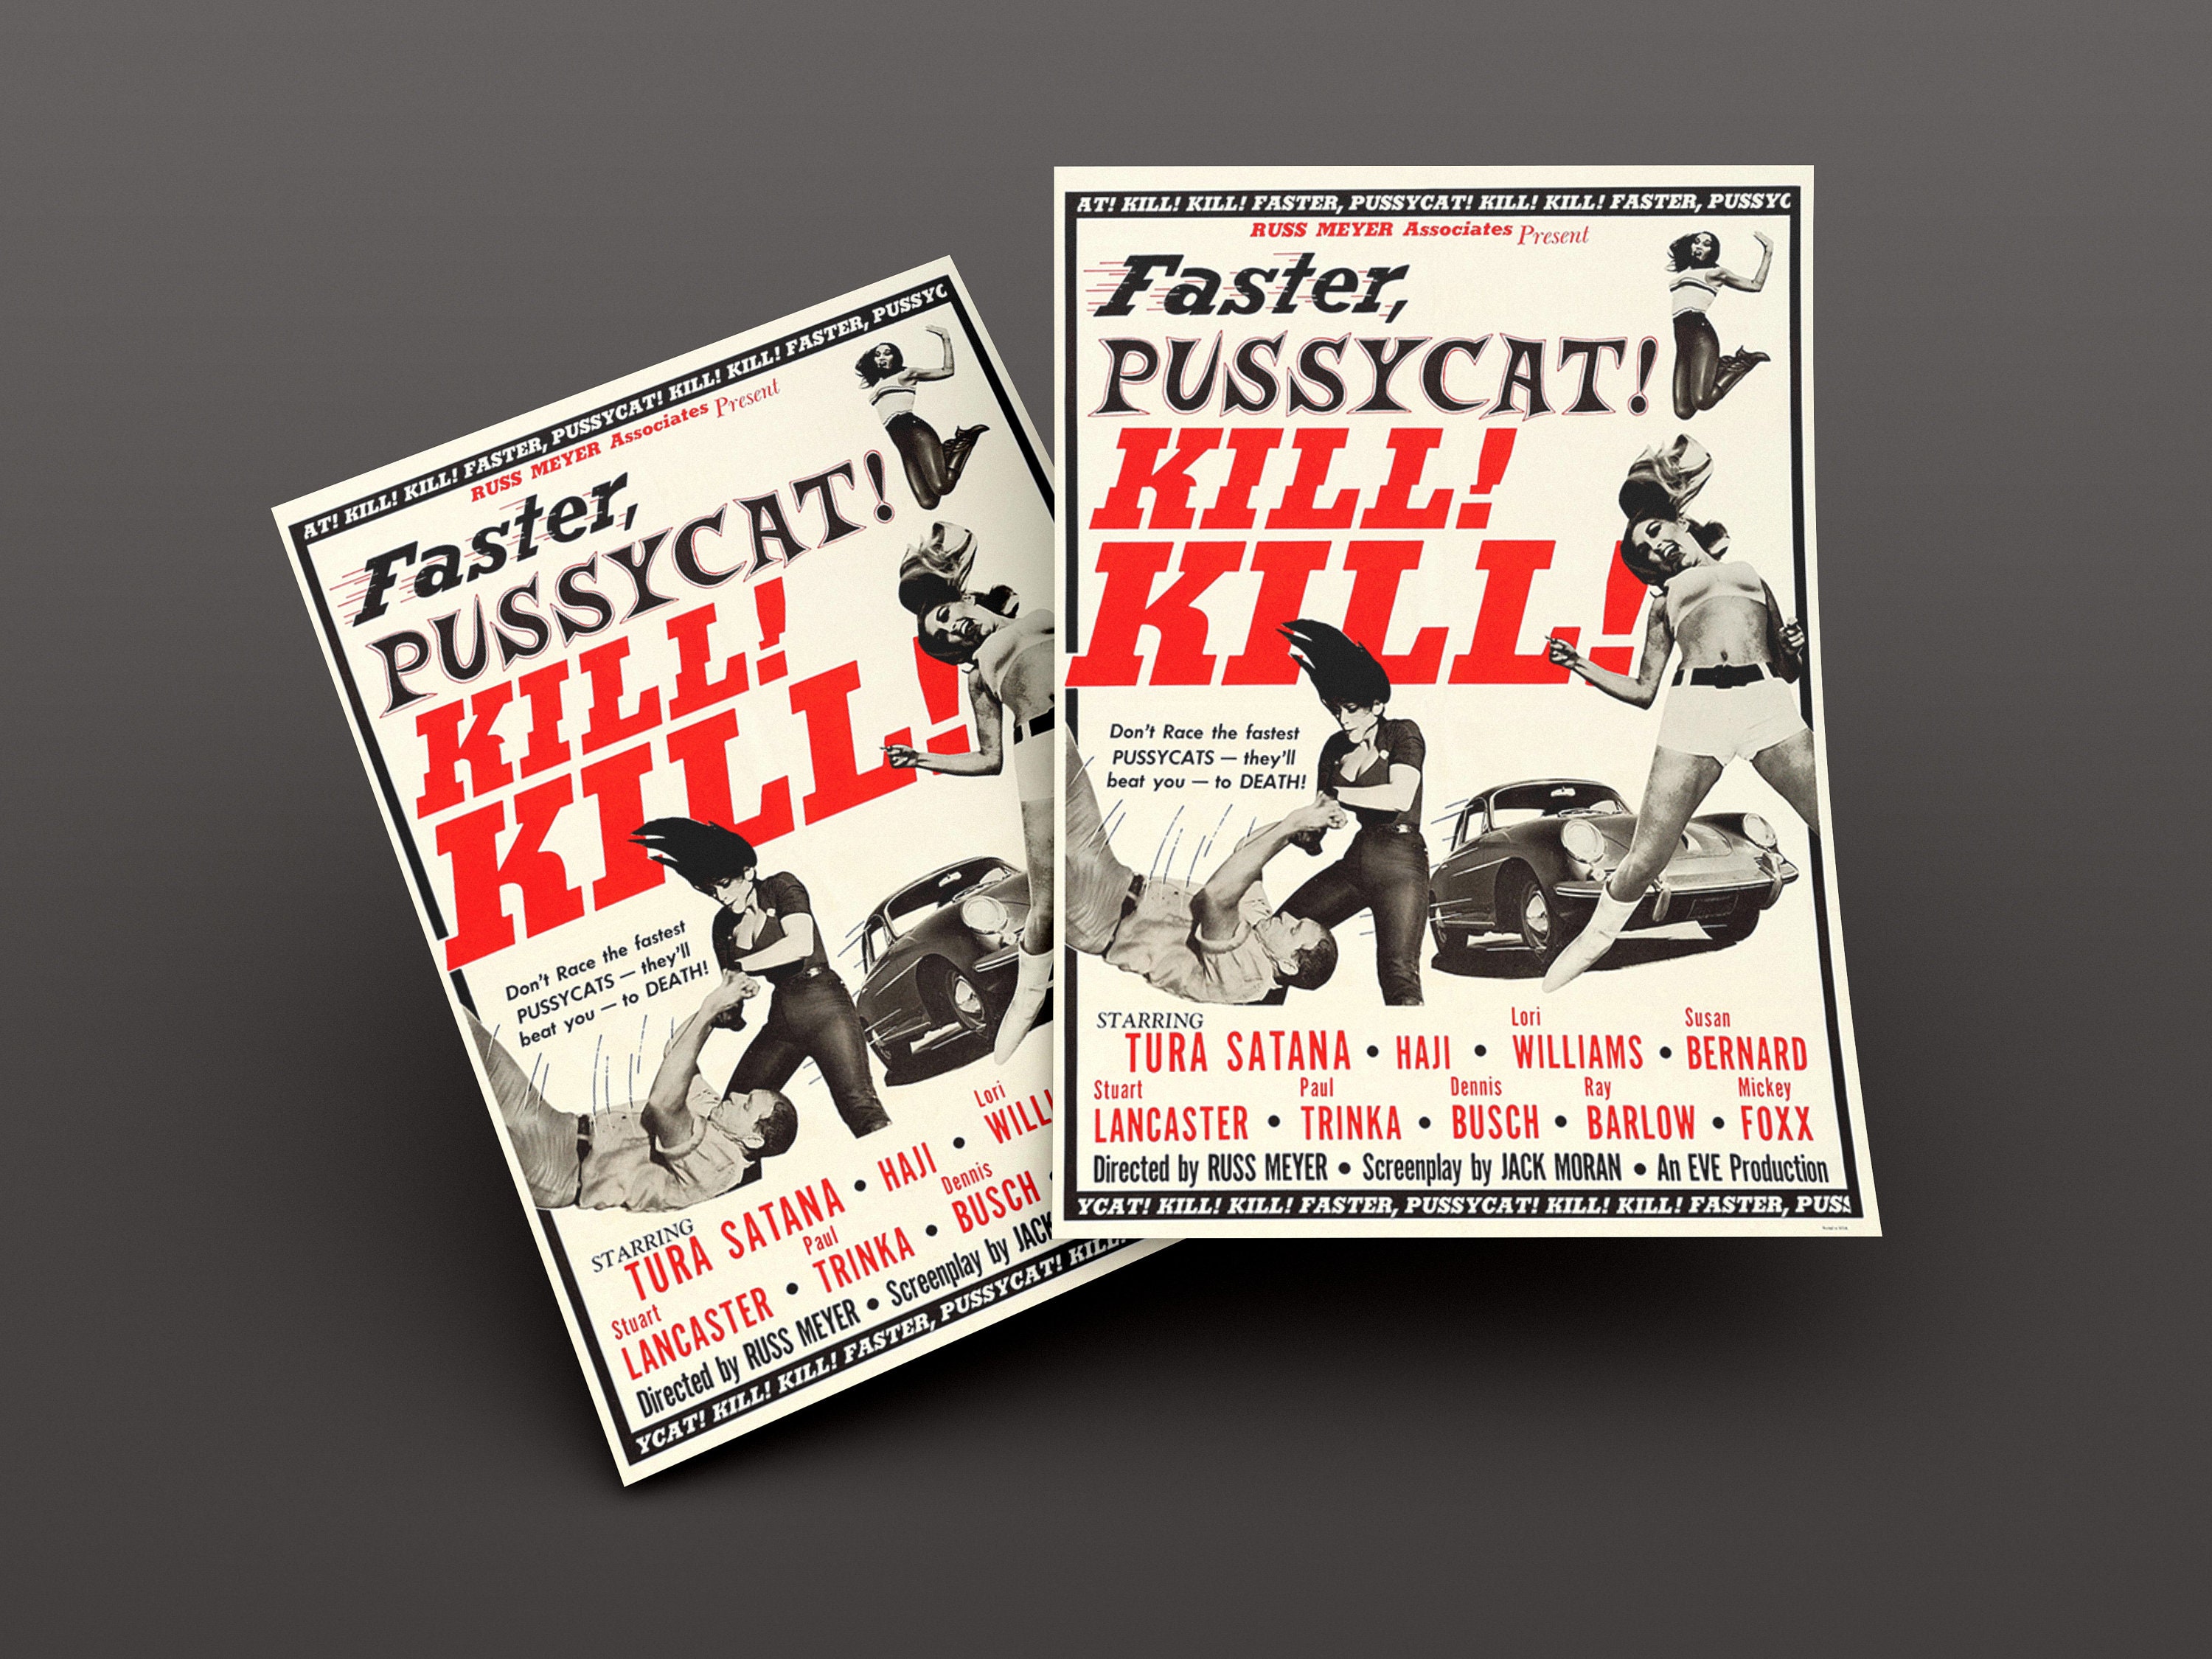 Faster Pussycat 1965 Movie Poster Print, Original Film Poster